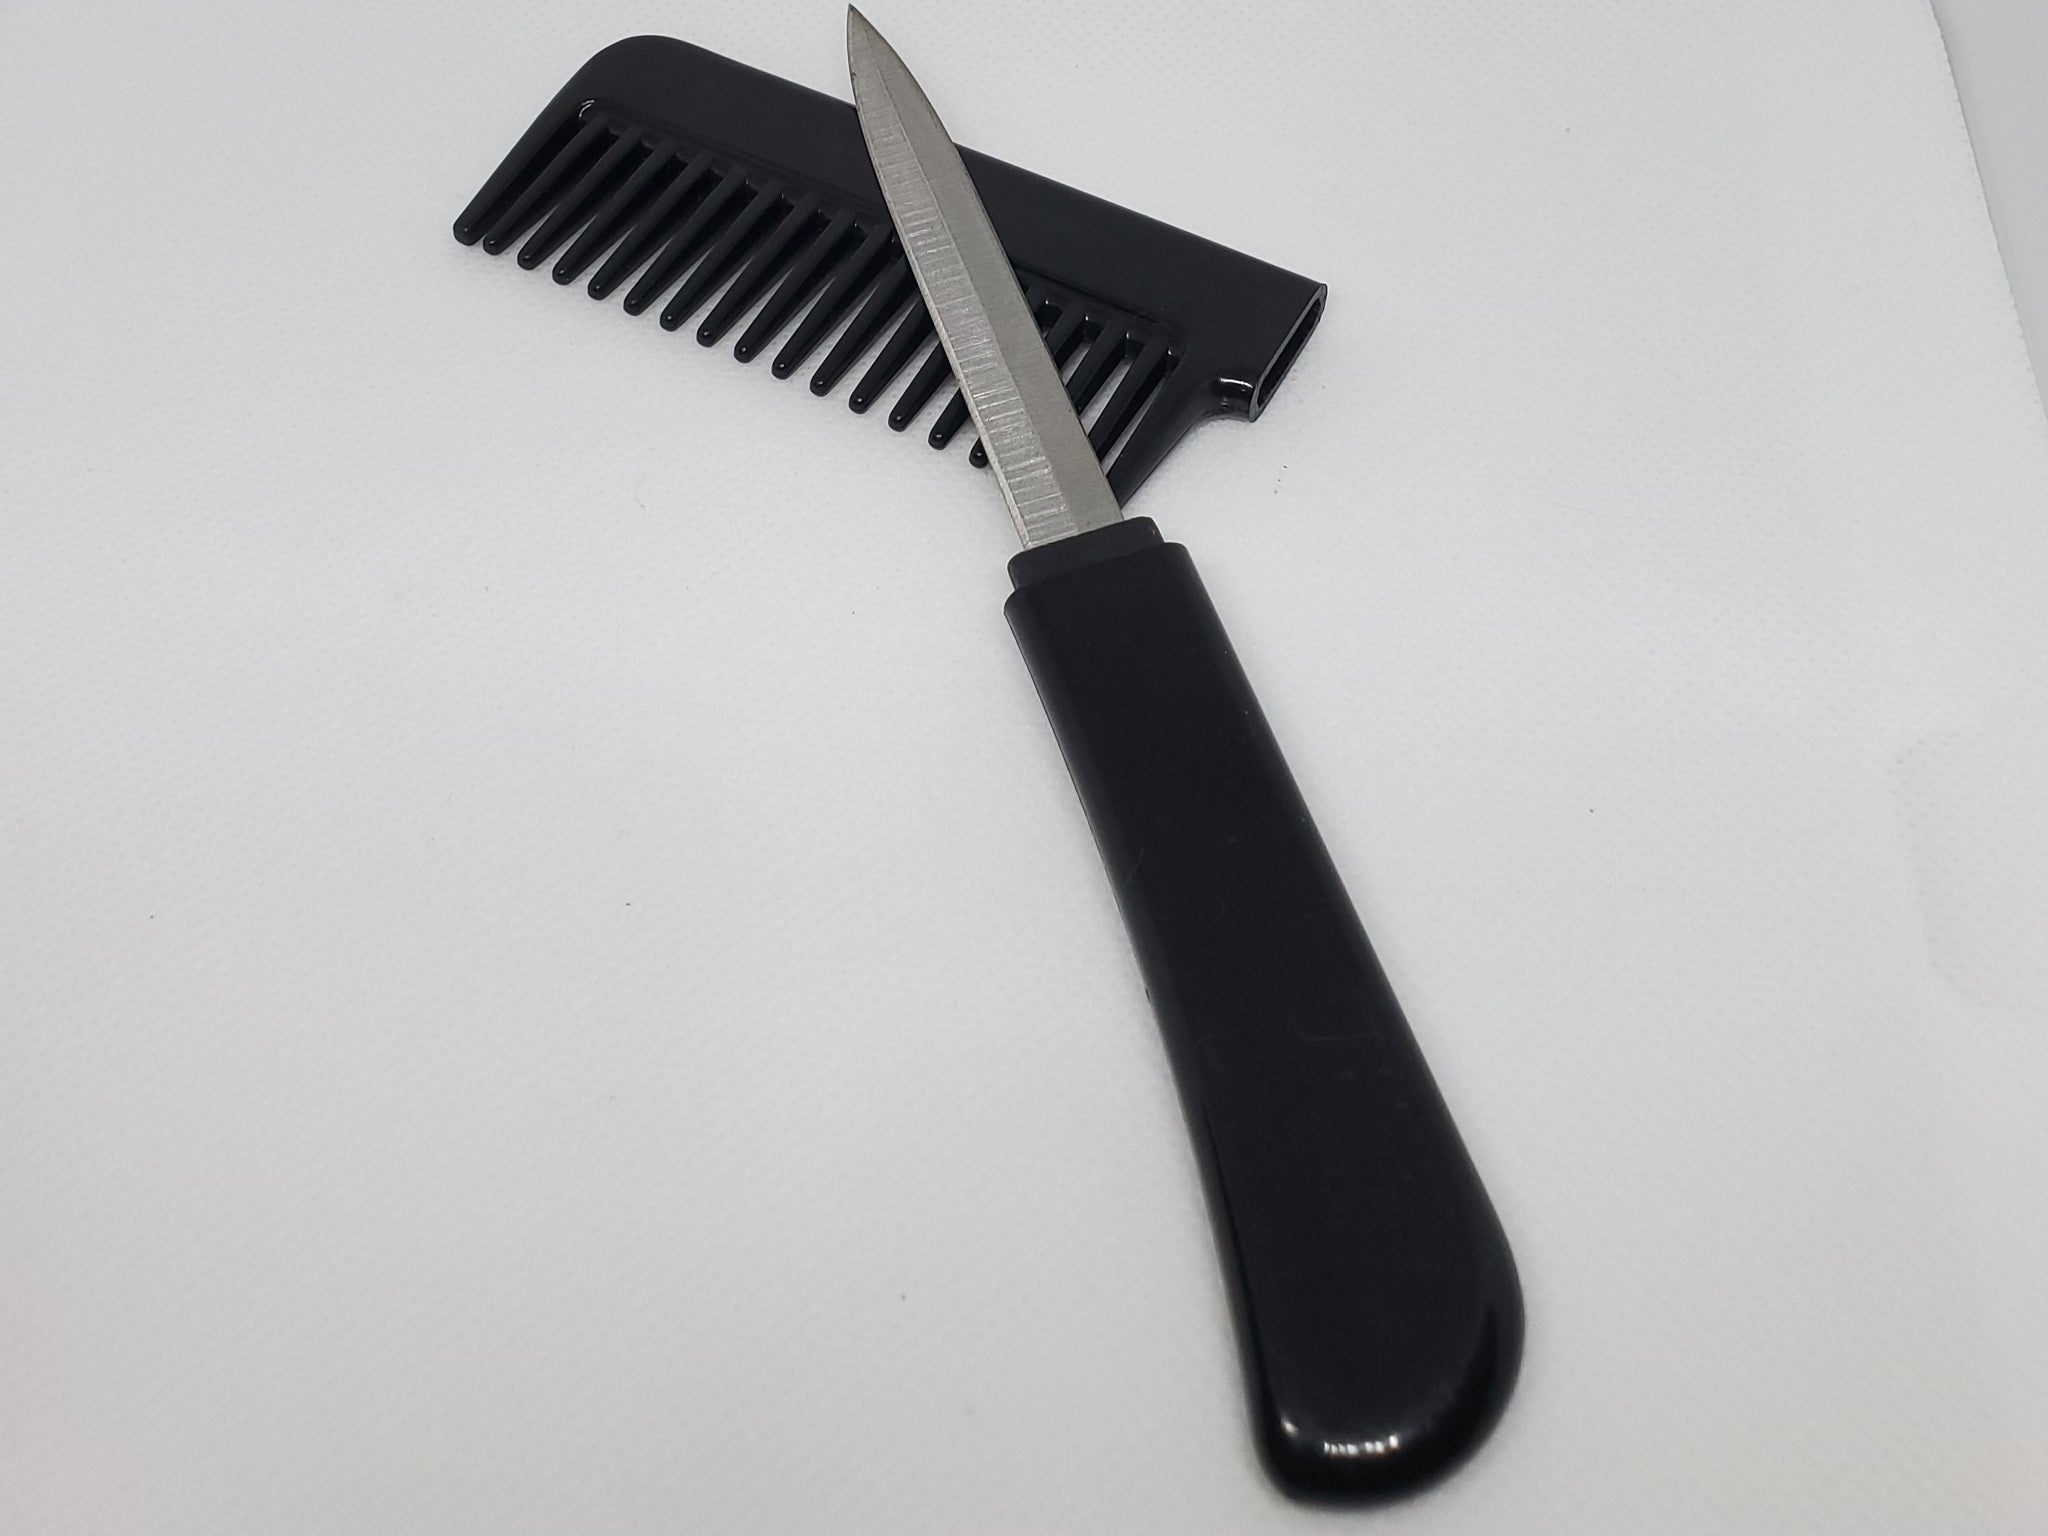 Comb-shaped knife